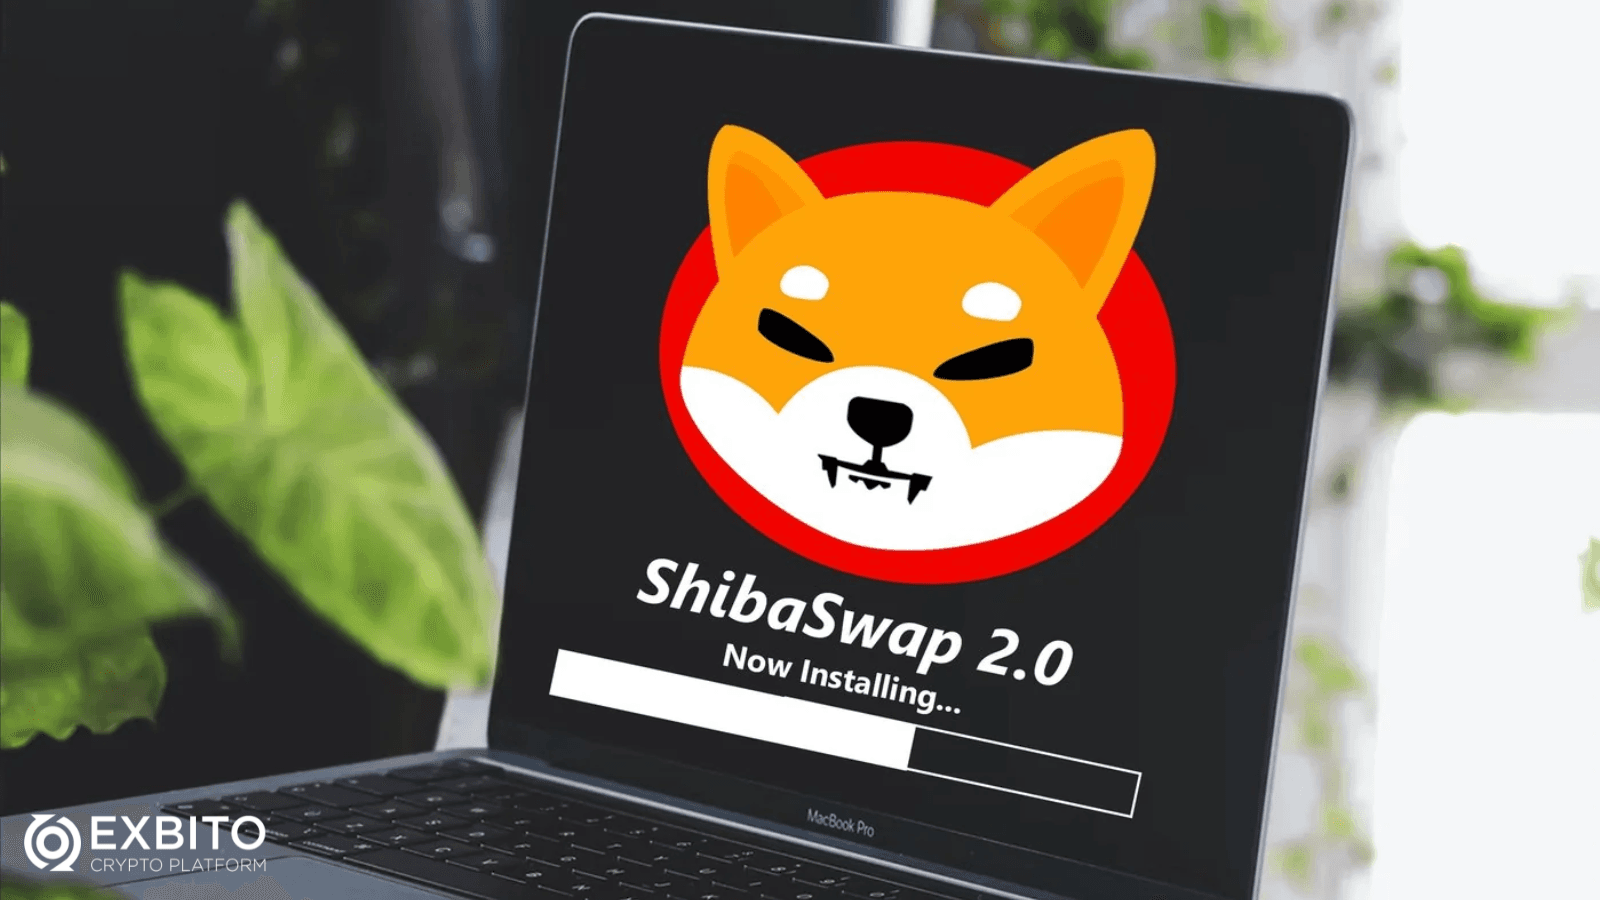 2.0 (ShibaSwap 2.0)